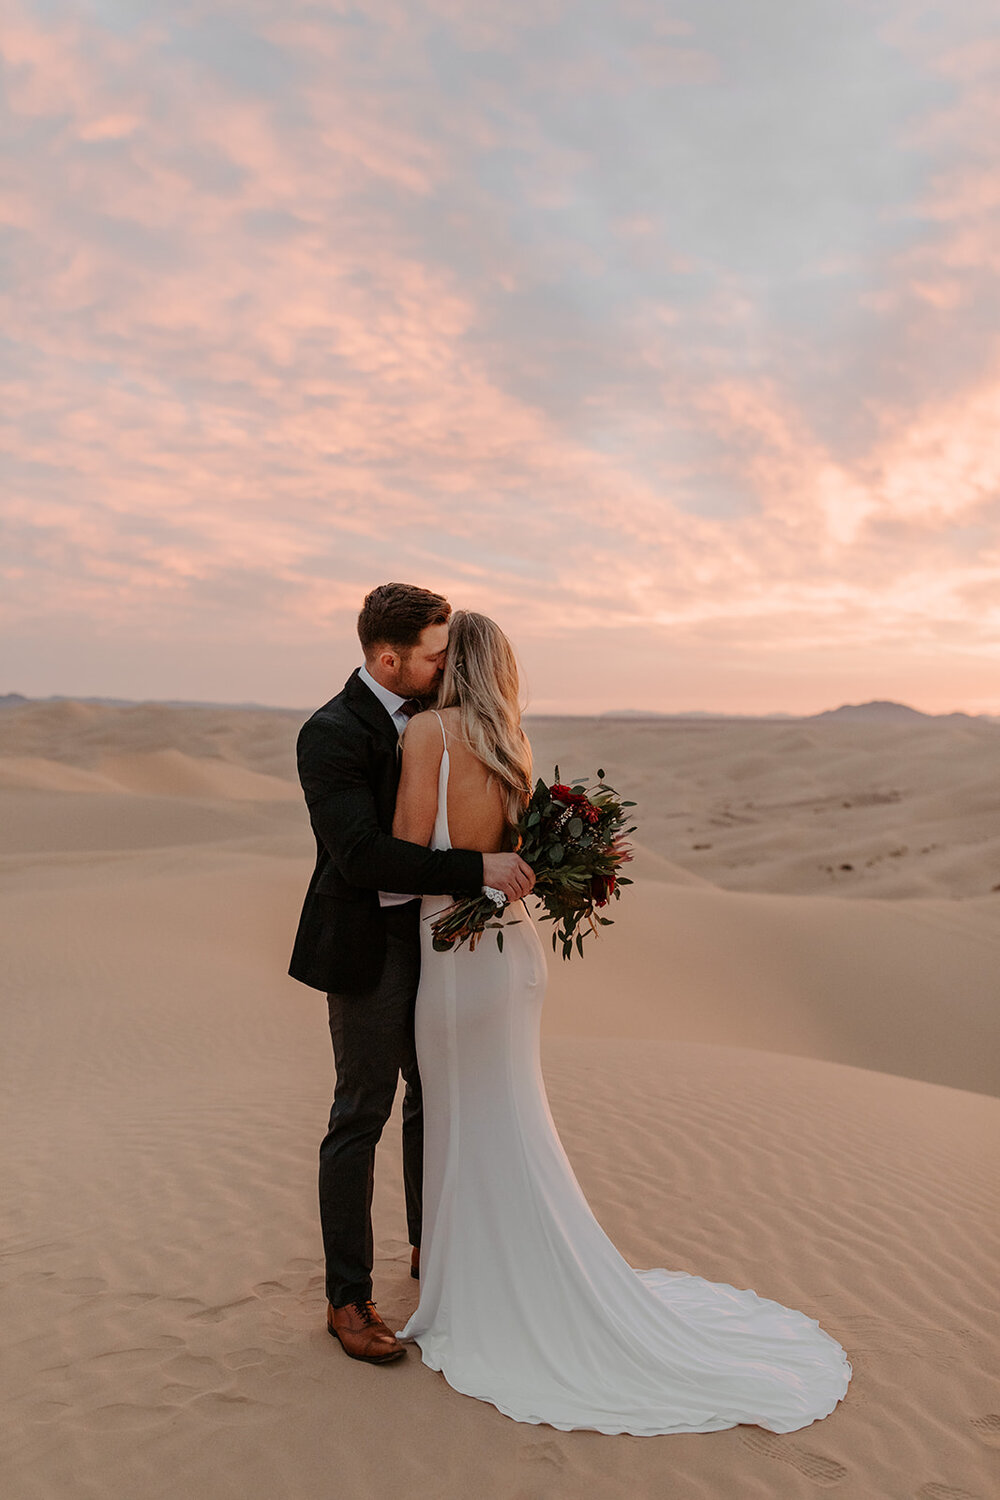 Our Brilliant Bride Riley | Imperial Sand Dunes. Desktop Image